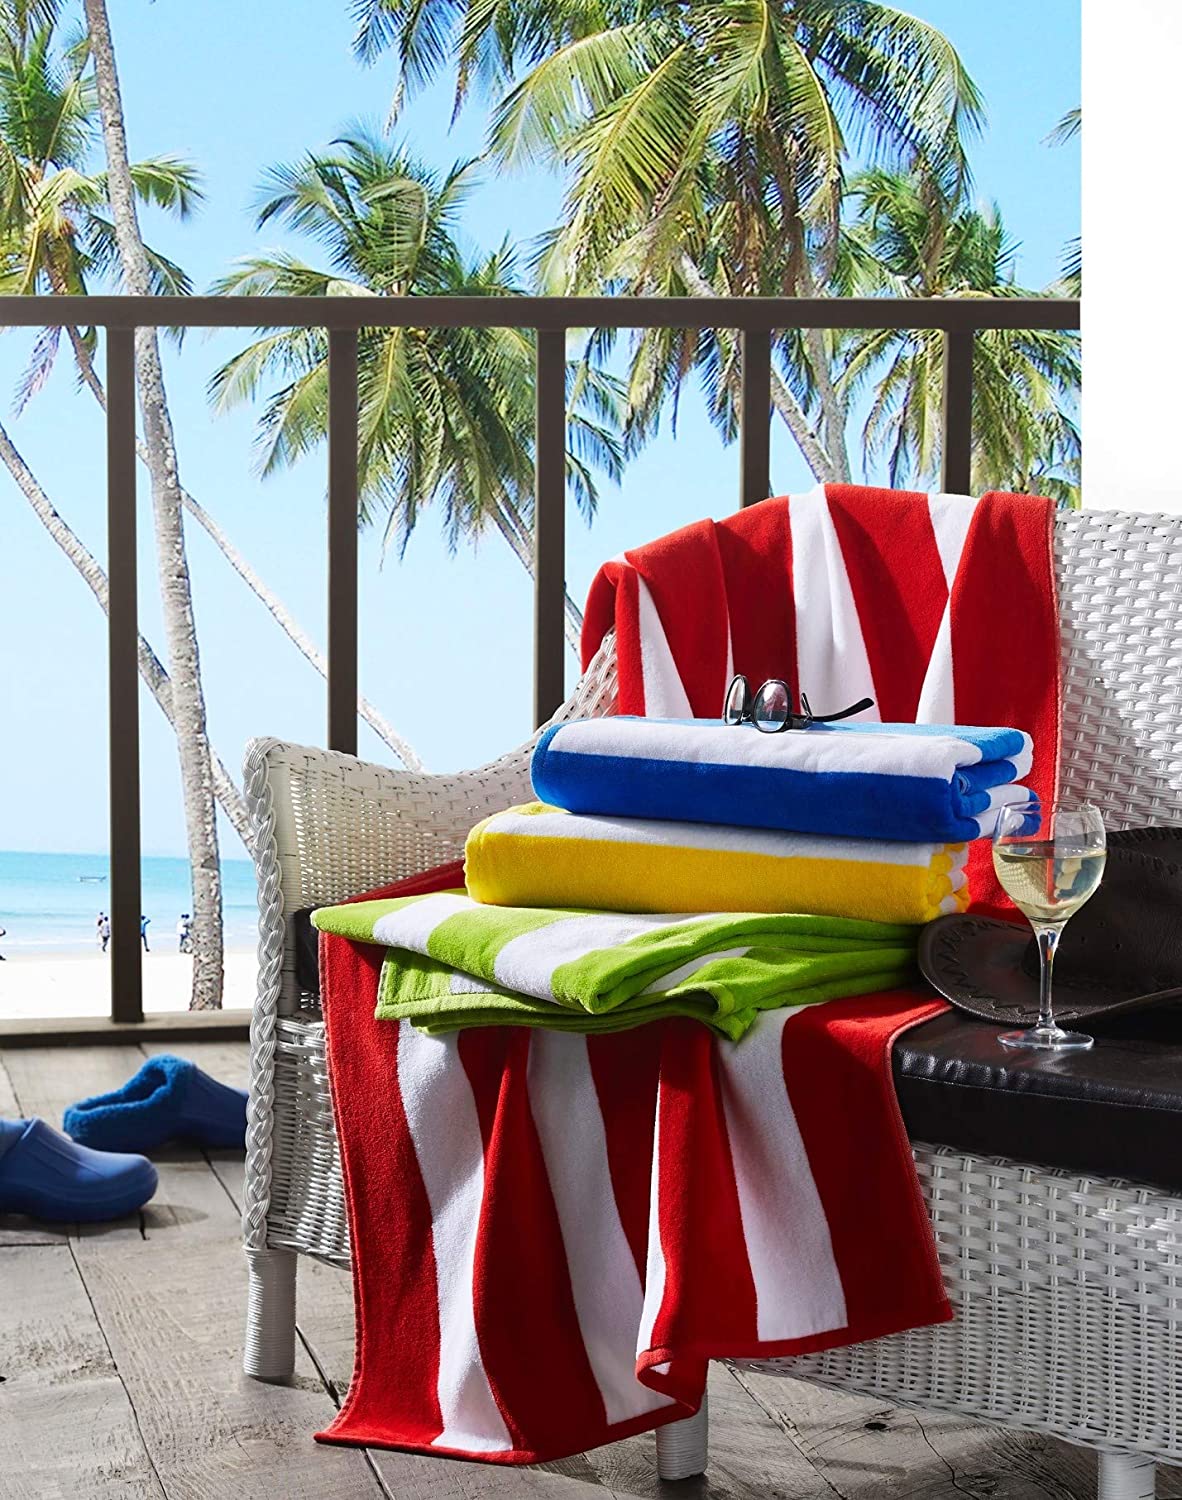 4-Pack: 30 x 60 Ultra-Soft 100% Cotton Striped Pool Cabana Hotel